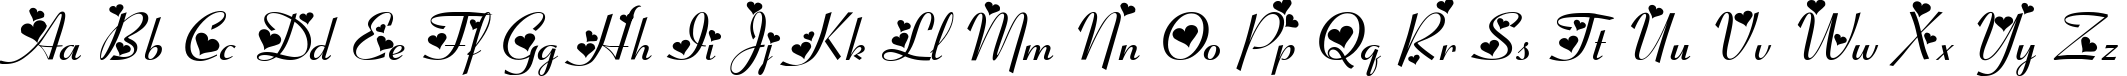 Пример написания английского алфавита шрифтом Ribbon Heart